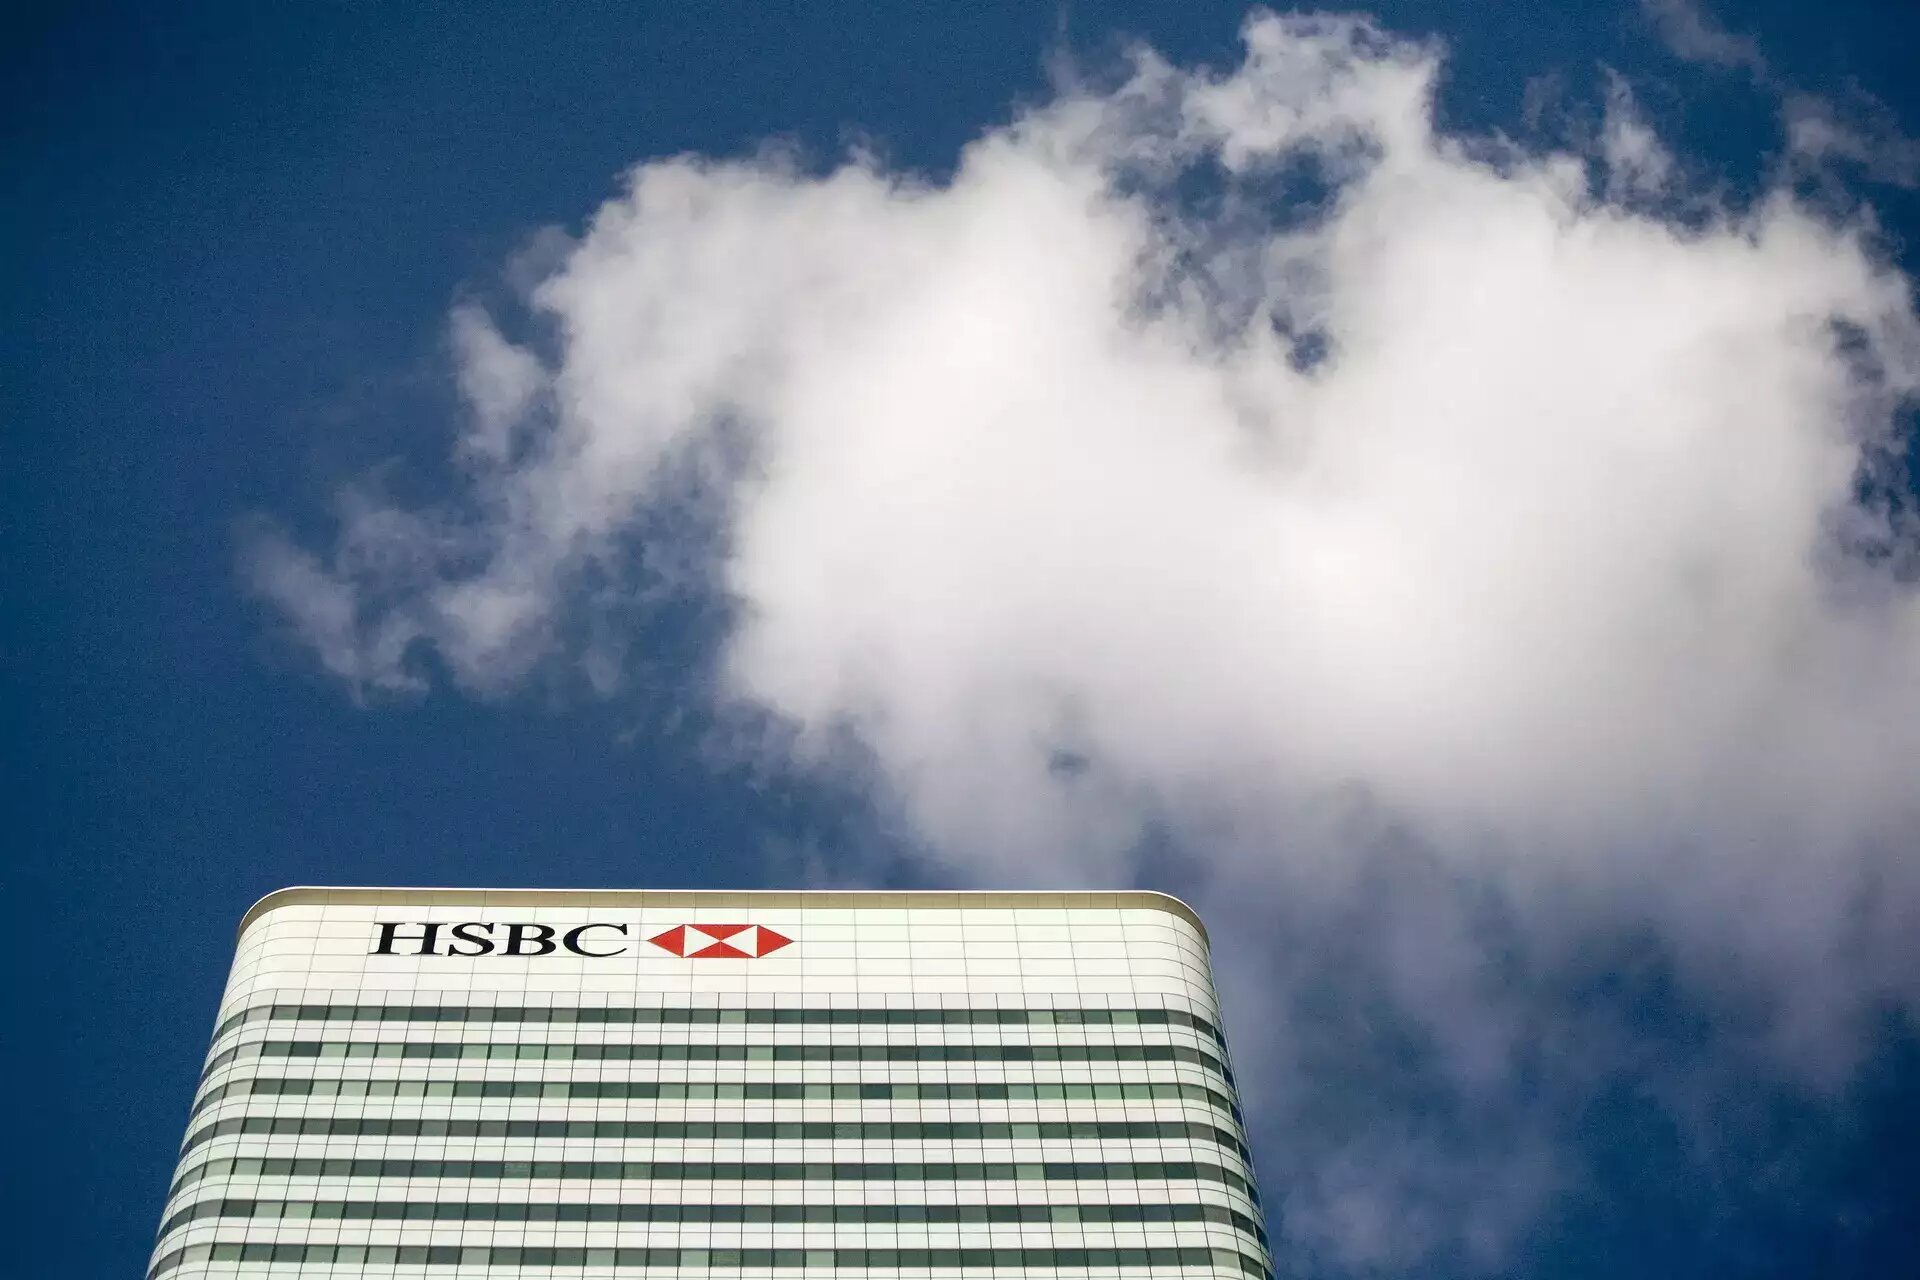 Mukesh Ambani luxury real estate bet gets HSBC financing boost